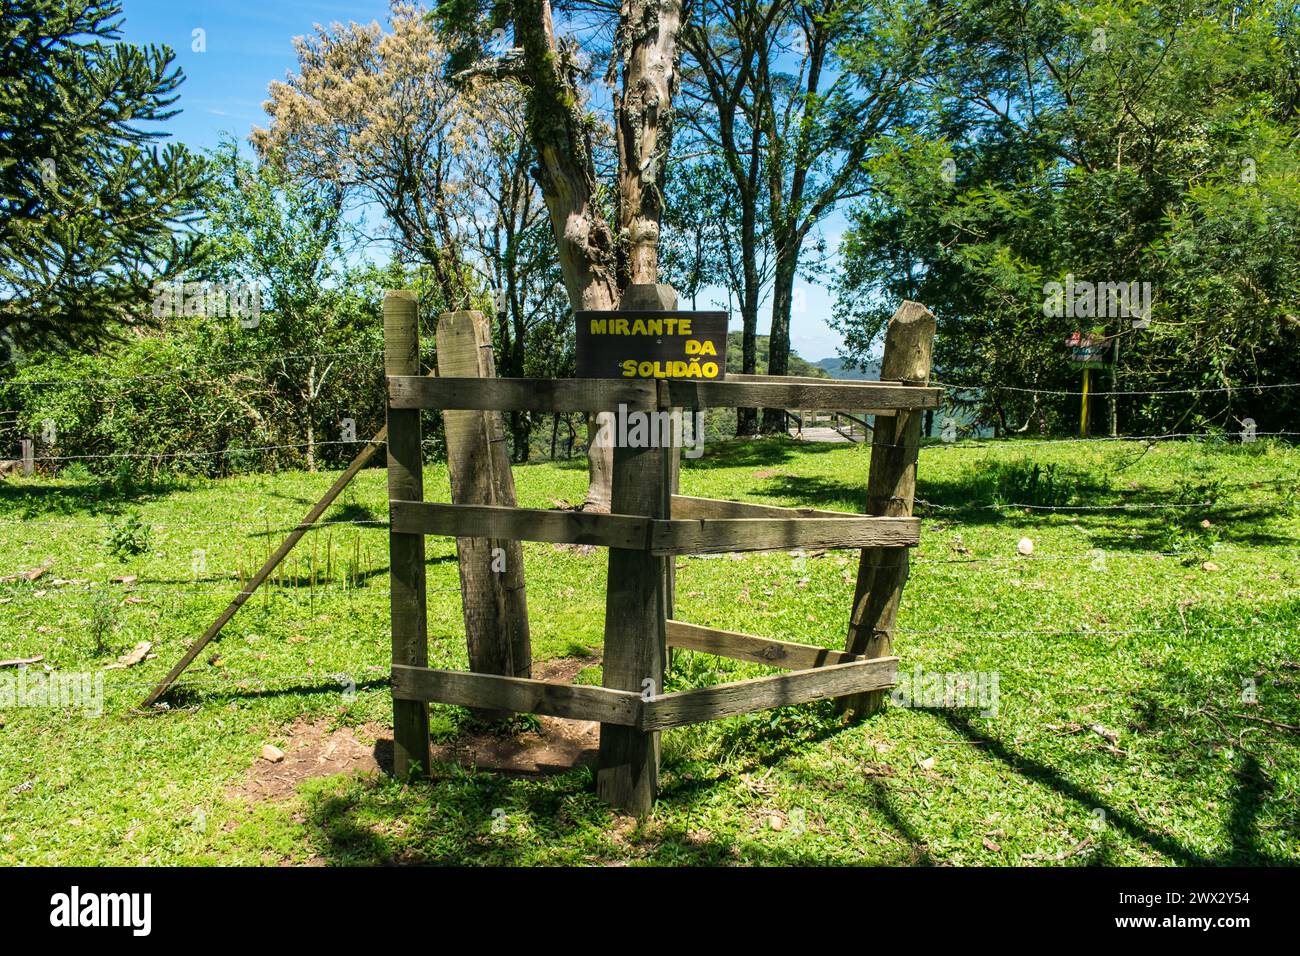 Entrance to the Mirante da Solidao (Solitude Viewpoint) at the Ronda Municipal Natural Park in Sao Francisco de Paula, South of Brazil Stock Photo